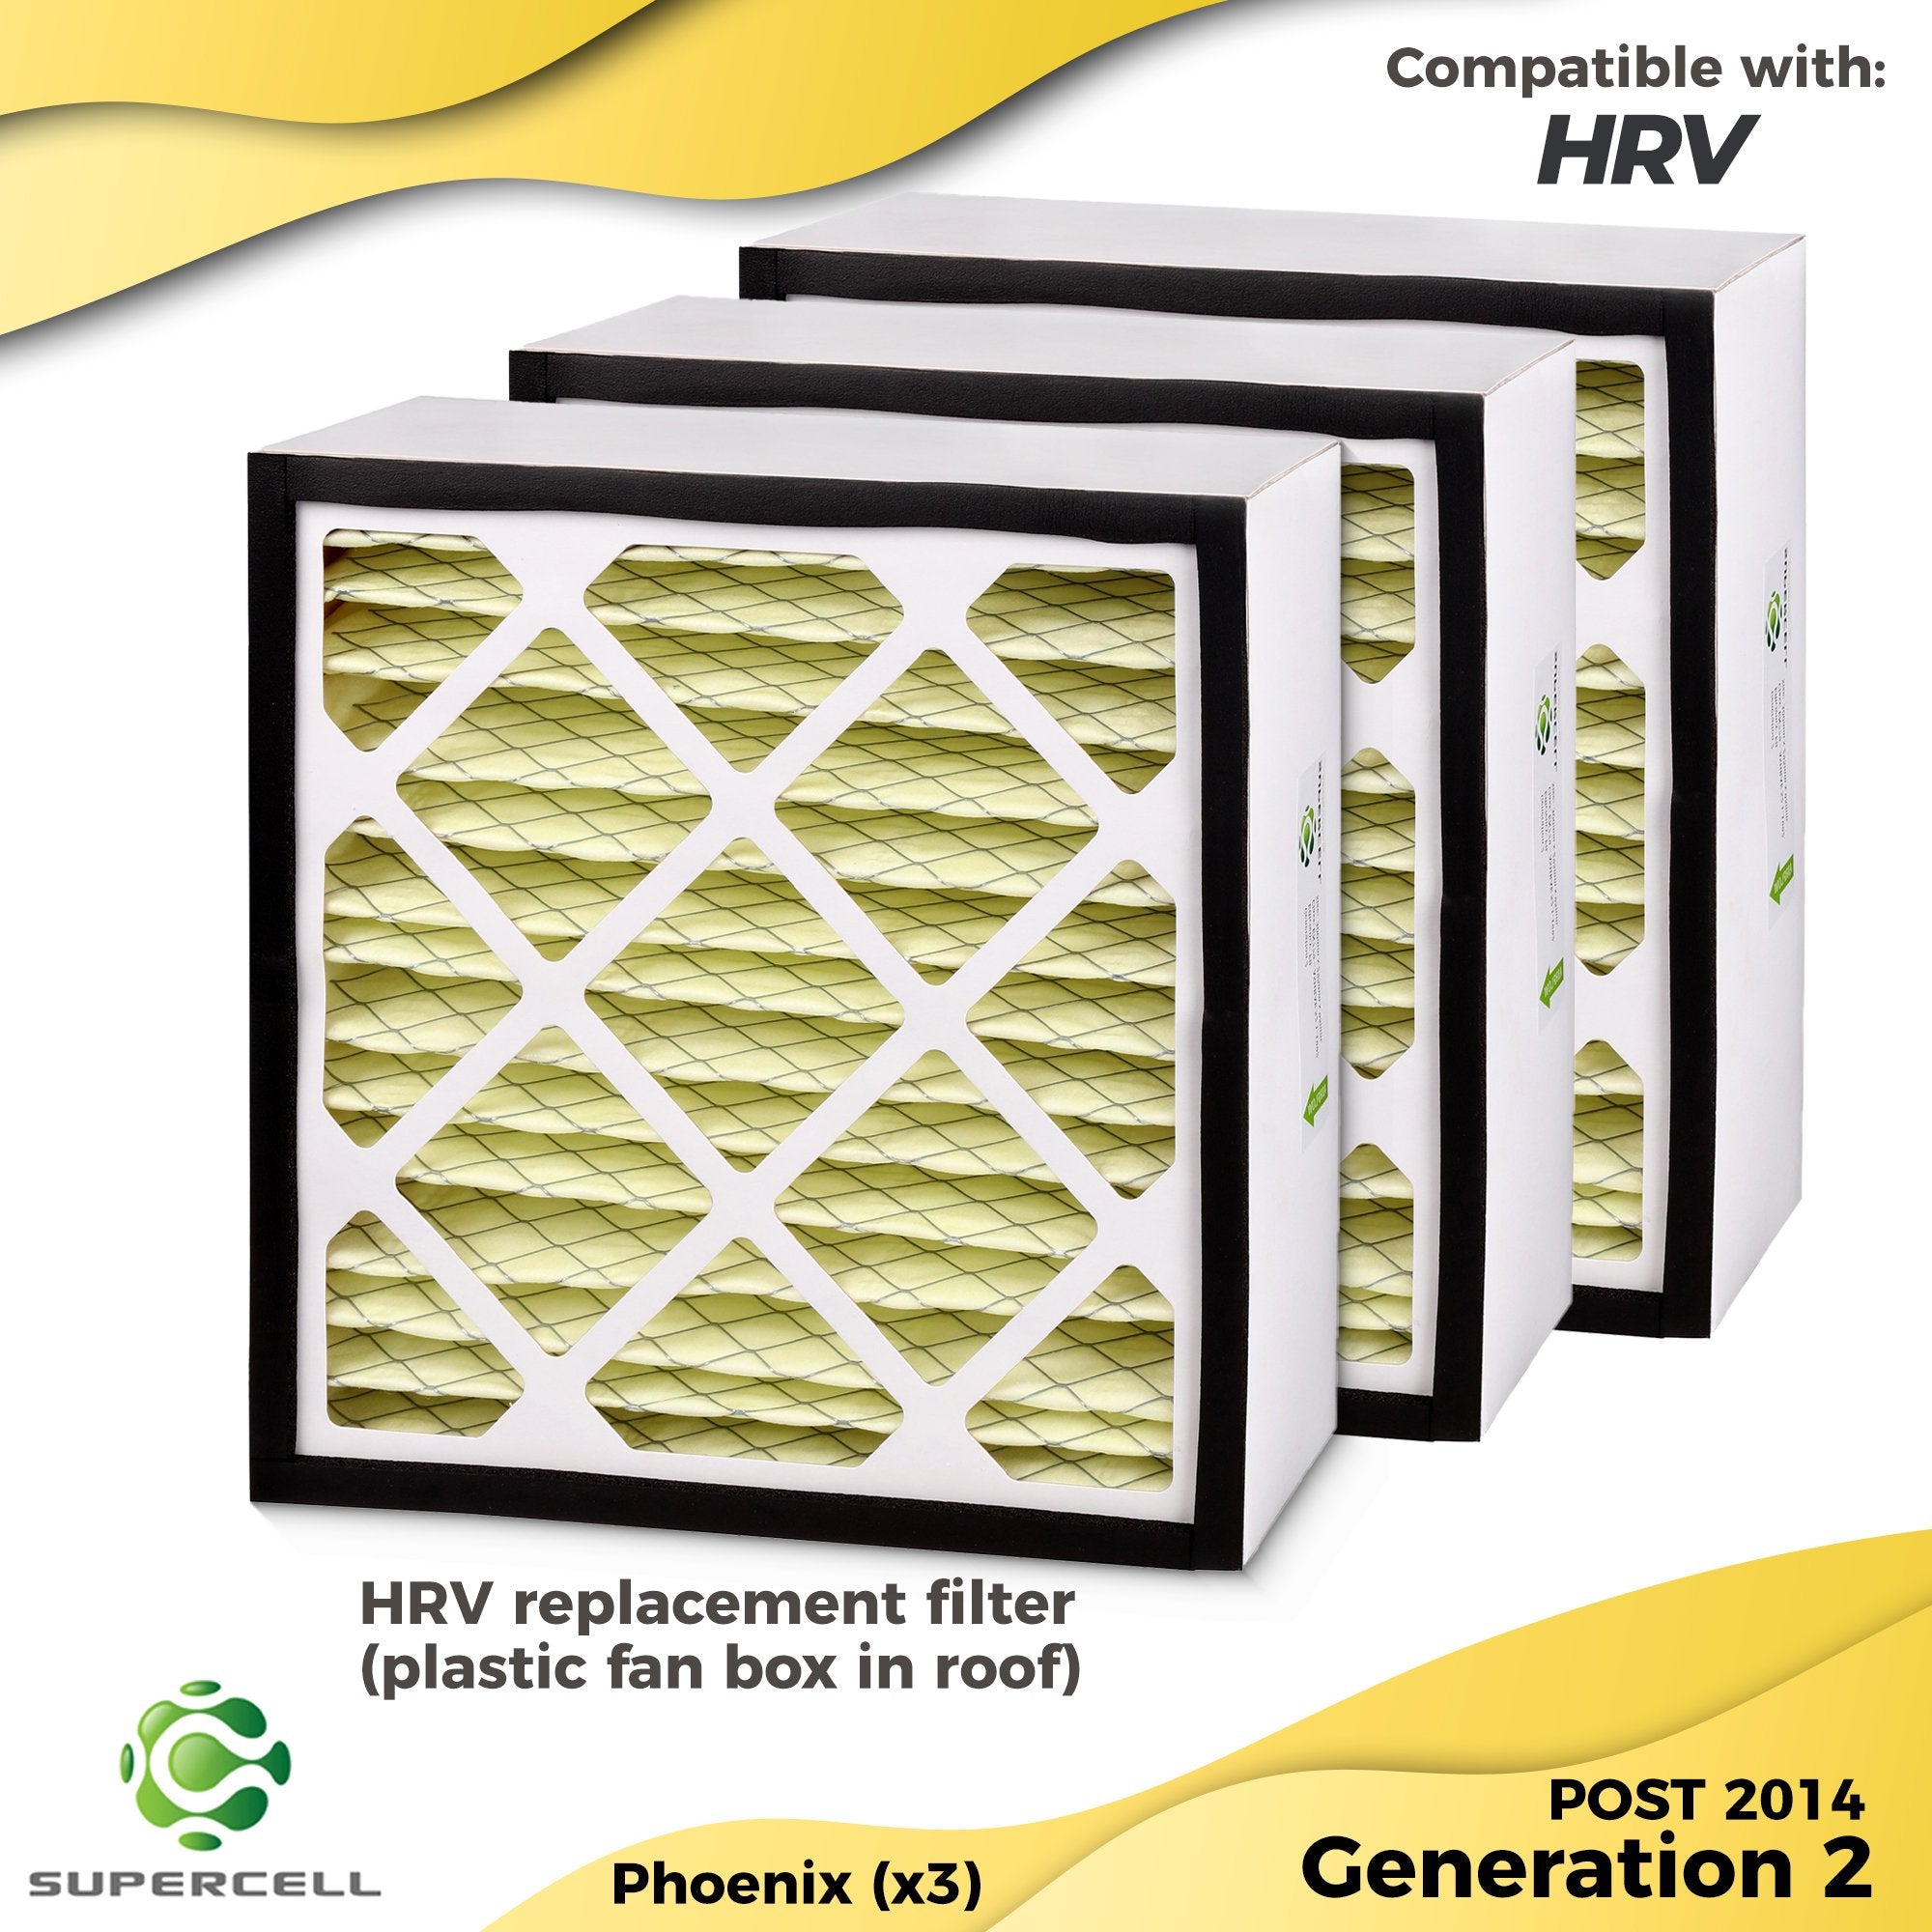 NZ #1 HRV ventilation filter supplier